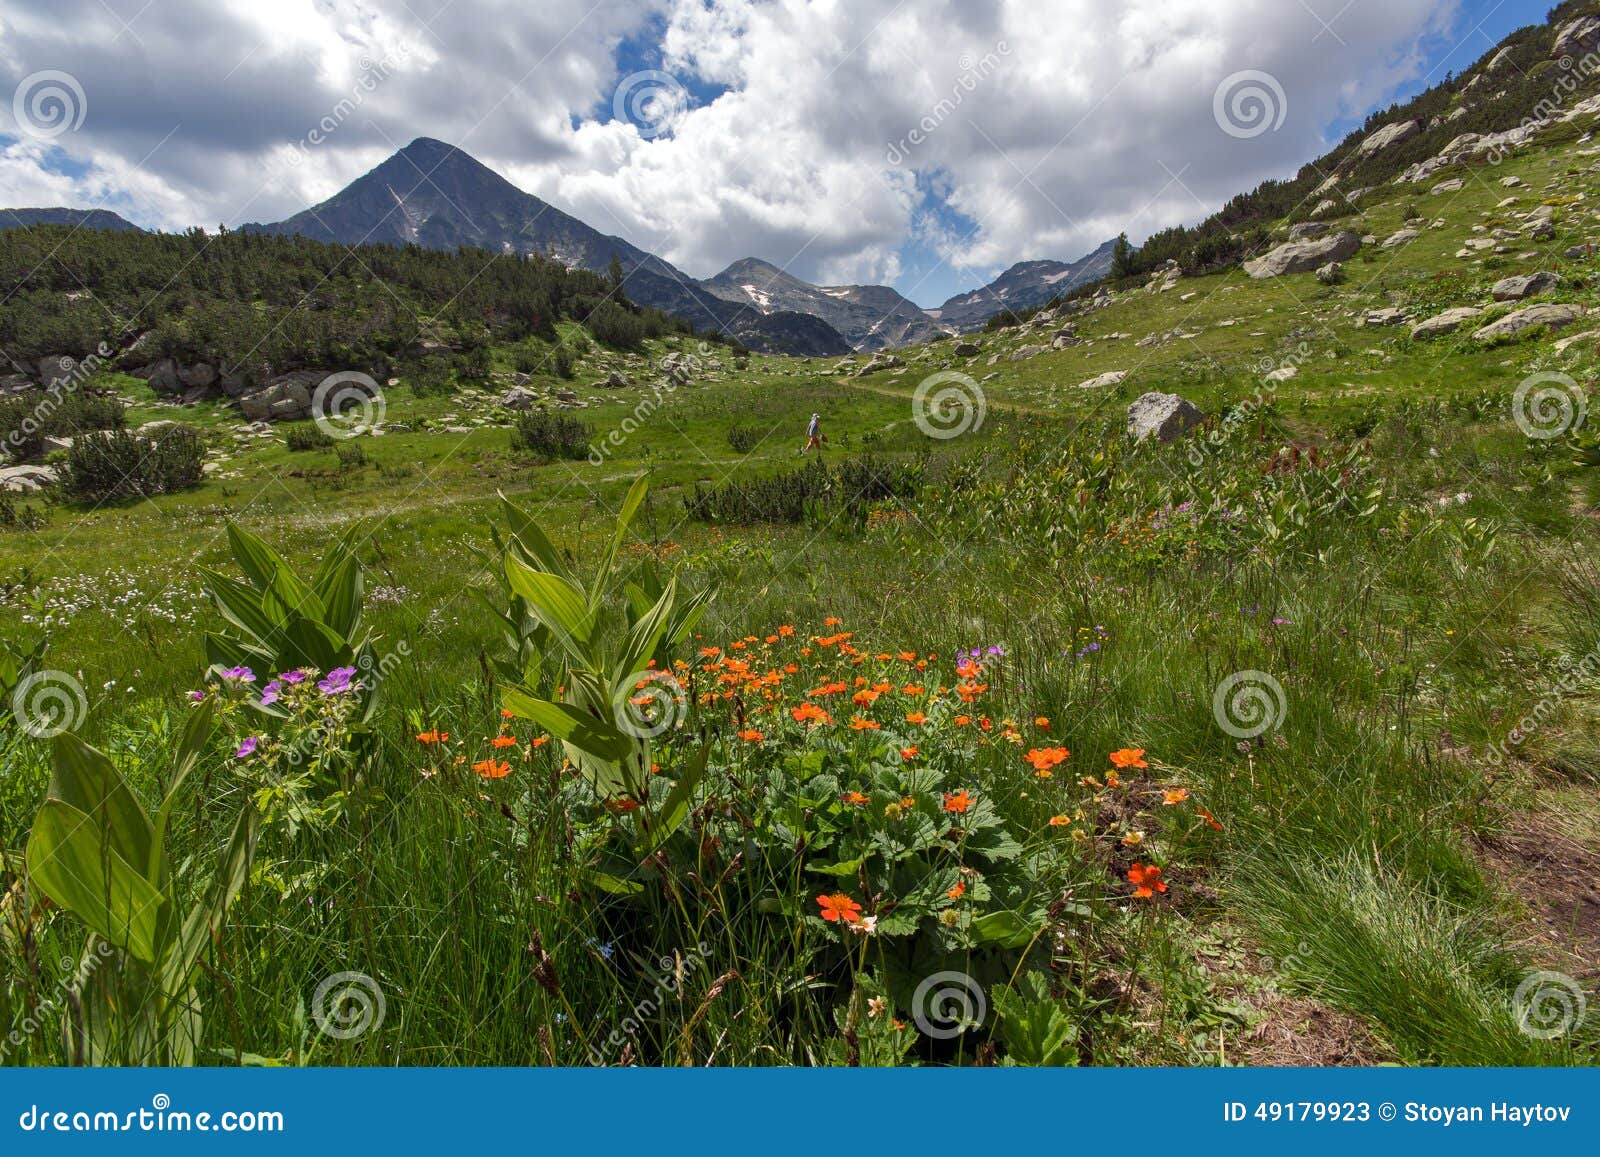 pirin mountain landscape with cloud adn flowers